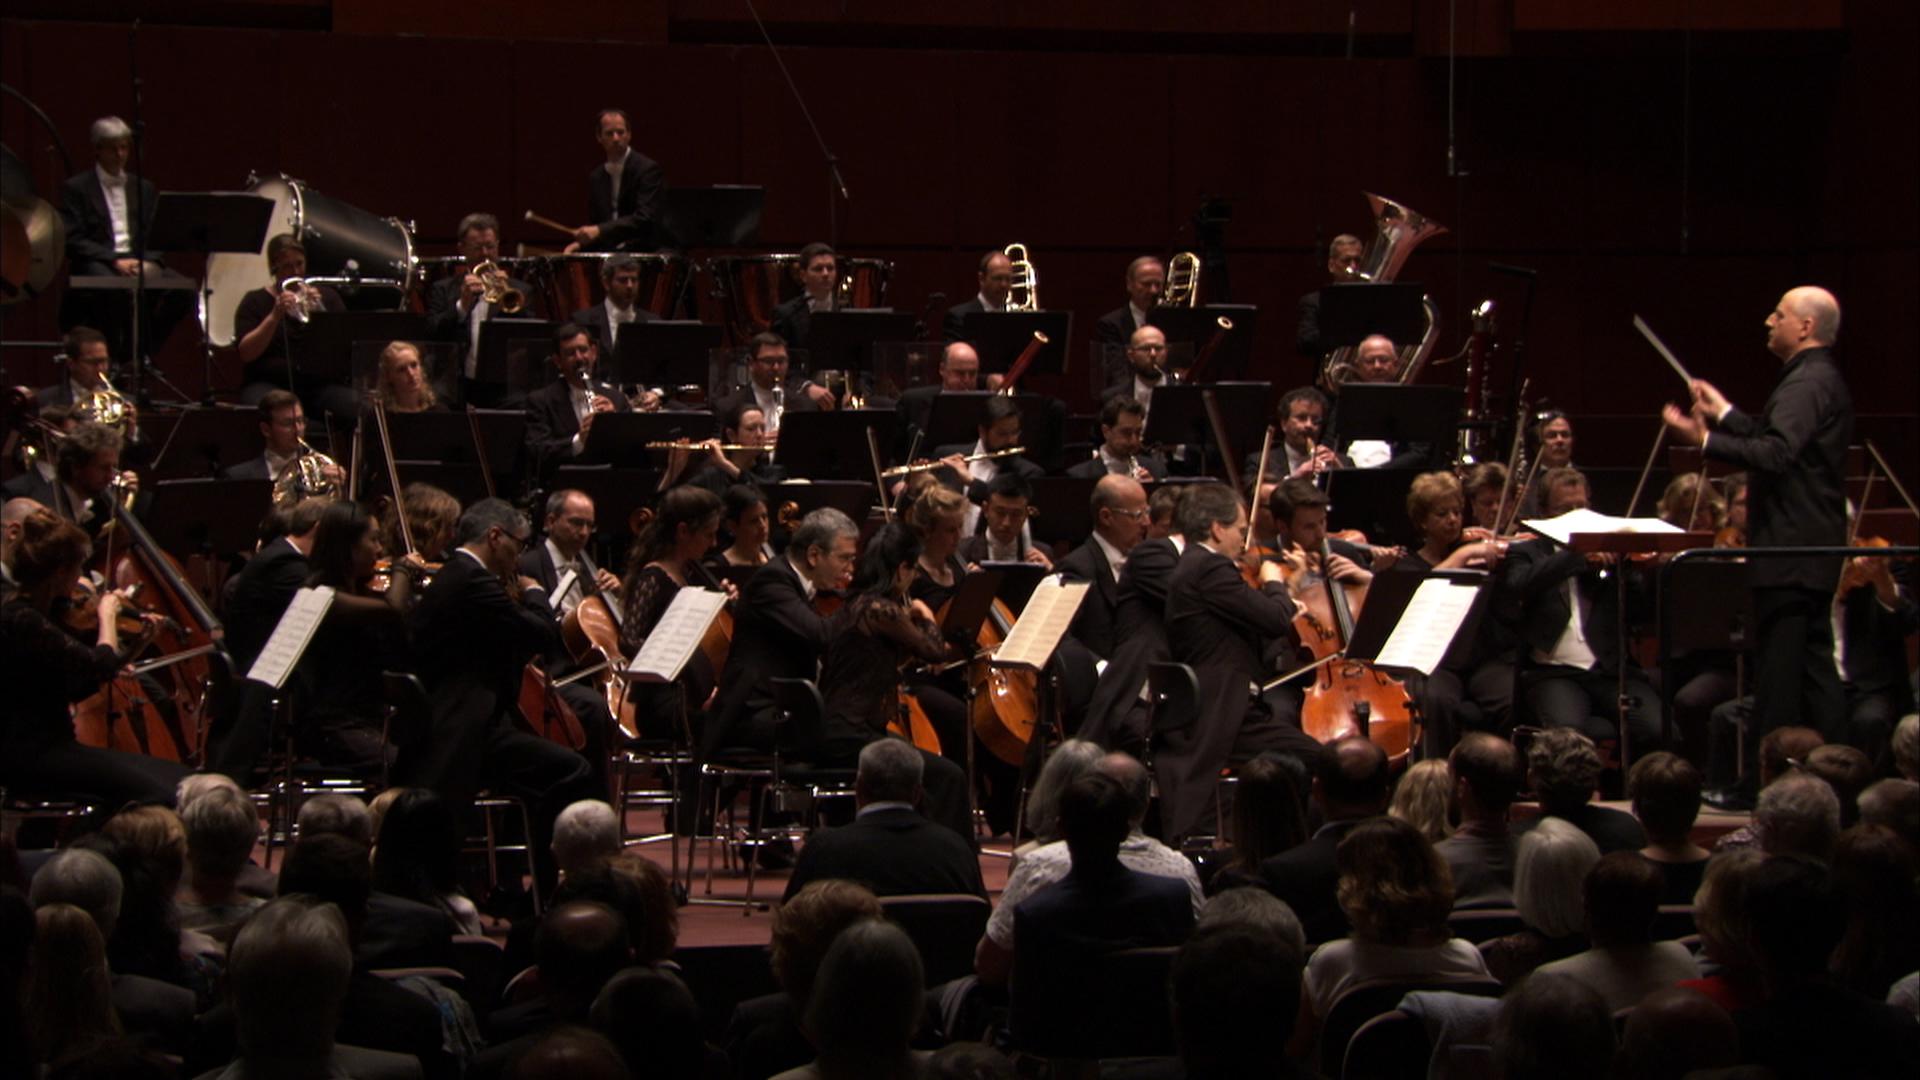 Balázs Nemes - Schmidt: Symphony No. 4 in C Major - I. Allegro molto moderato - Passionato (Live / 2018)